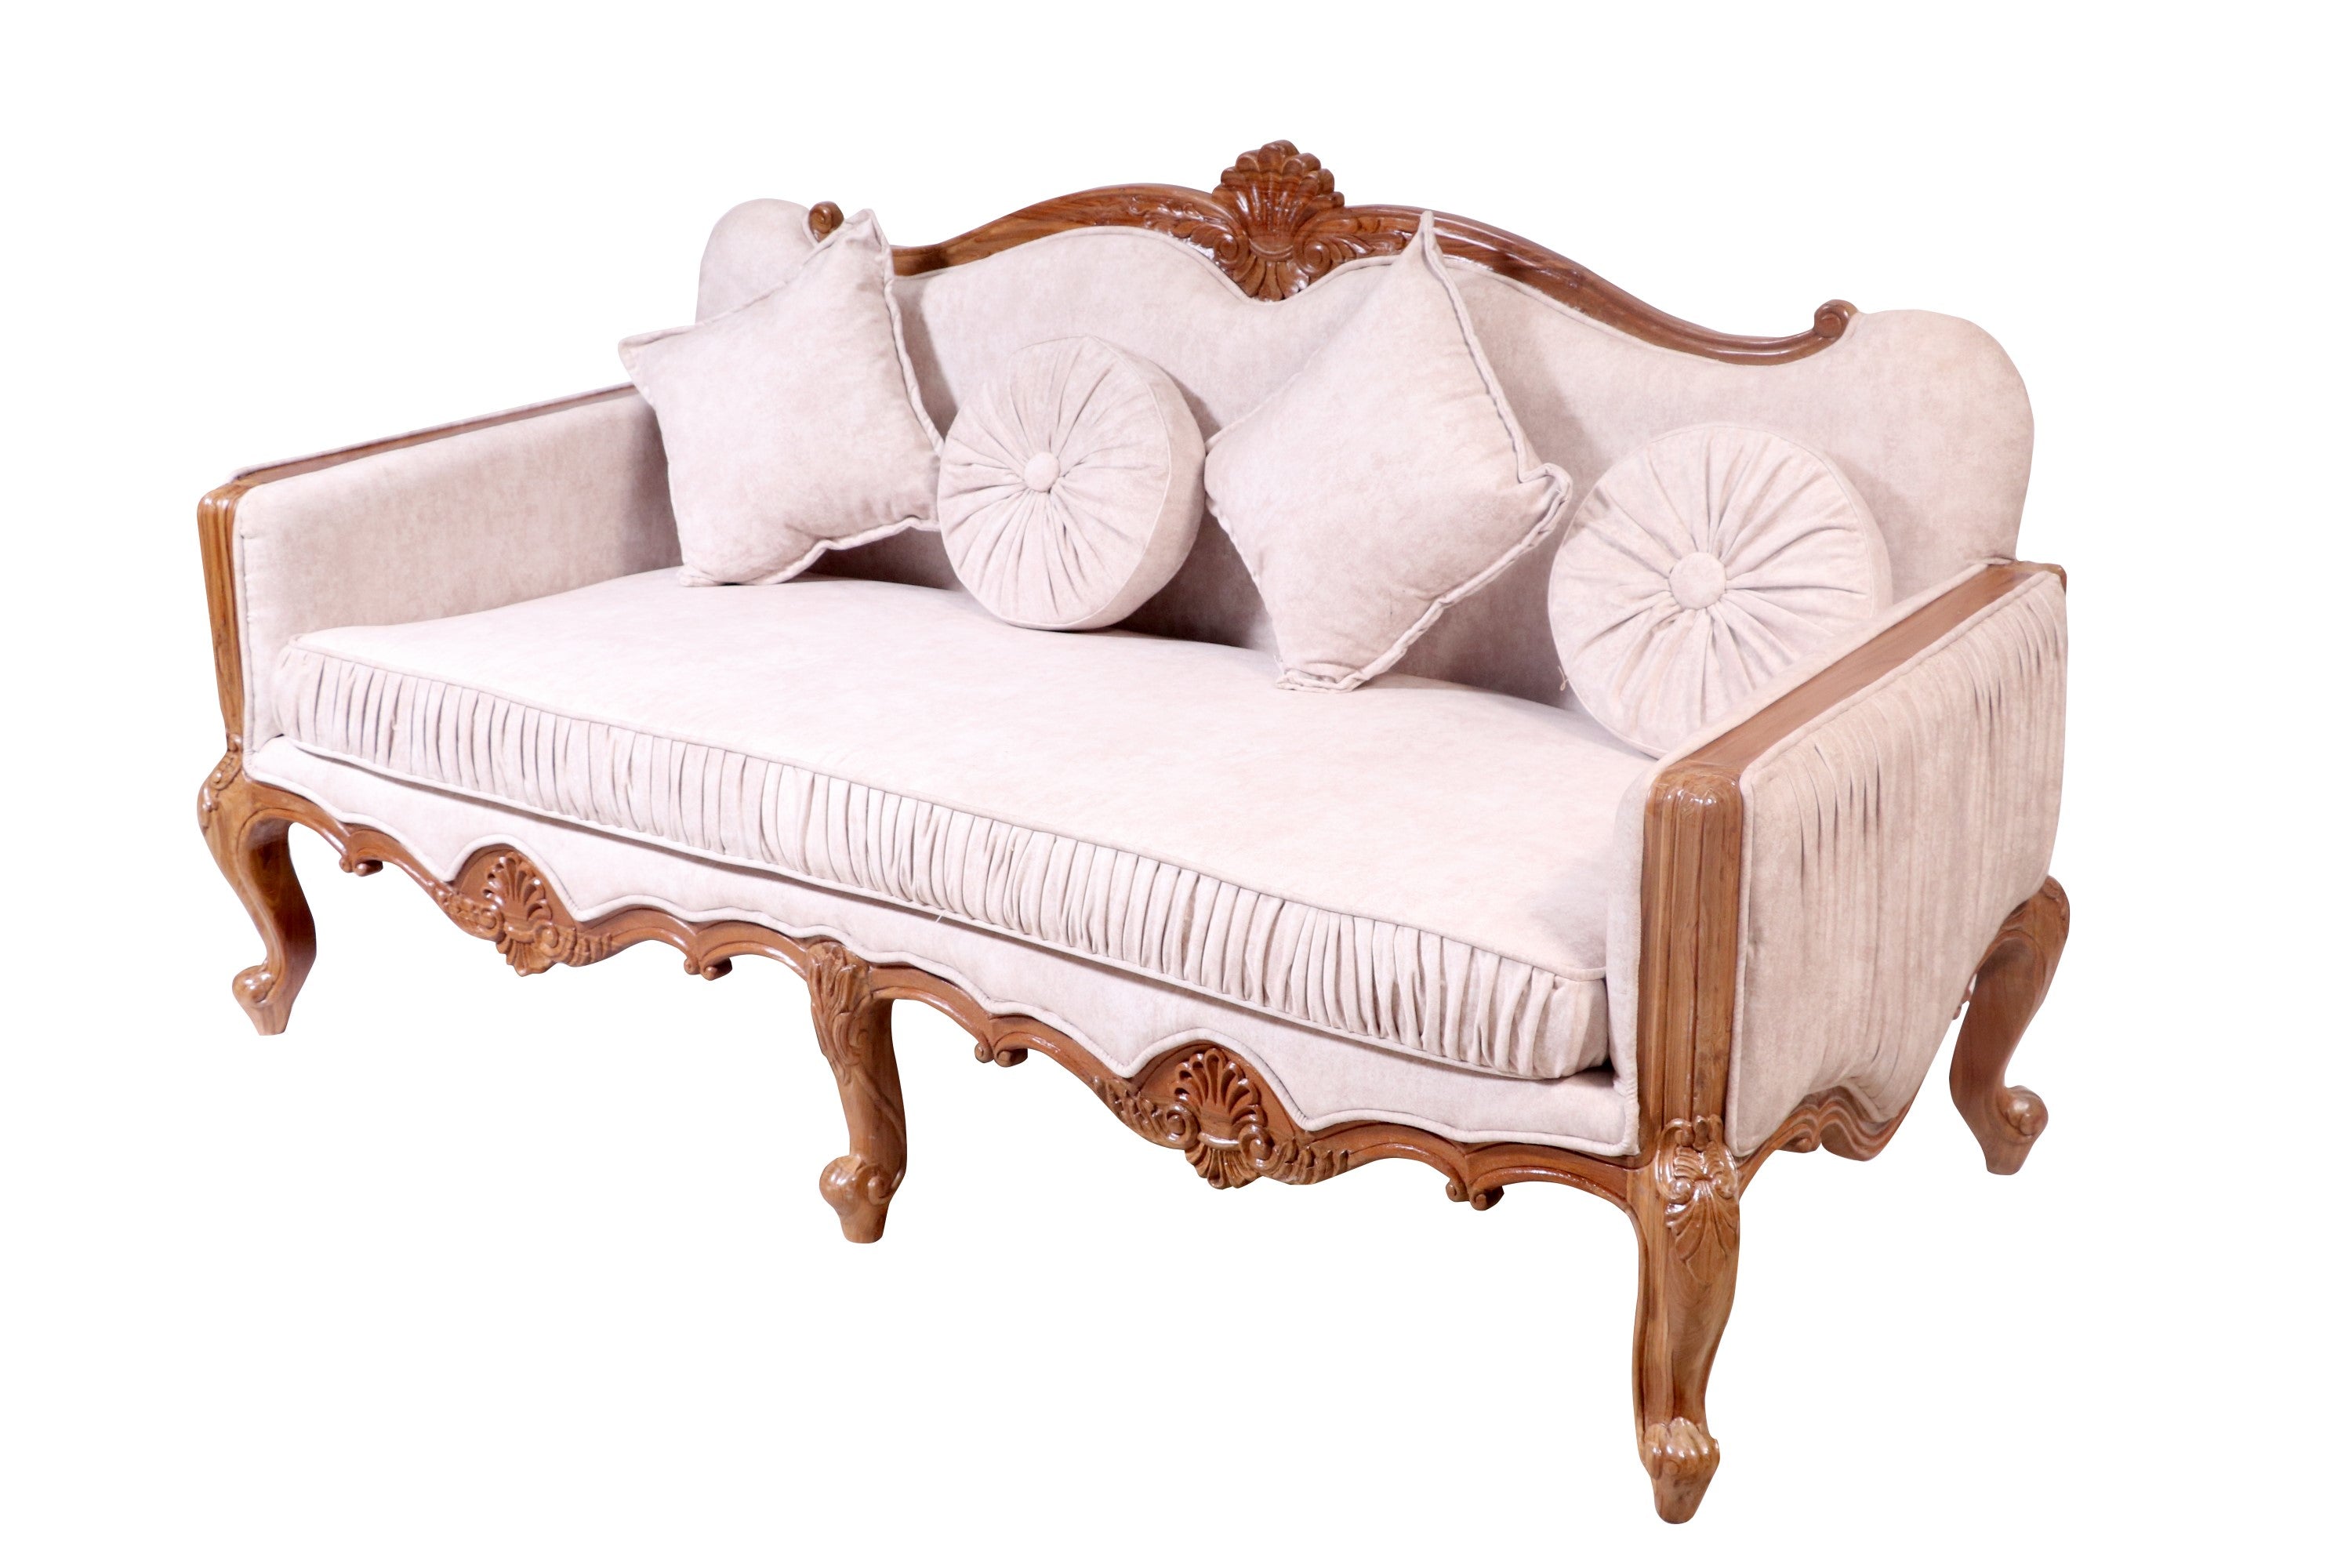 Classical 2 Seater vive la france concept teak wood sofa Sofa